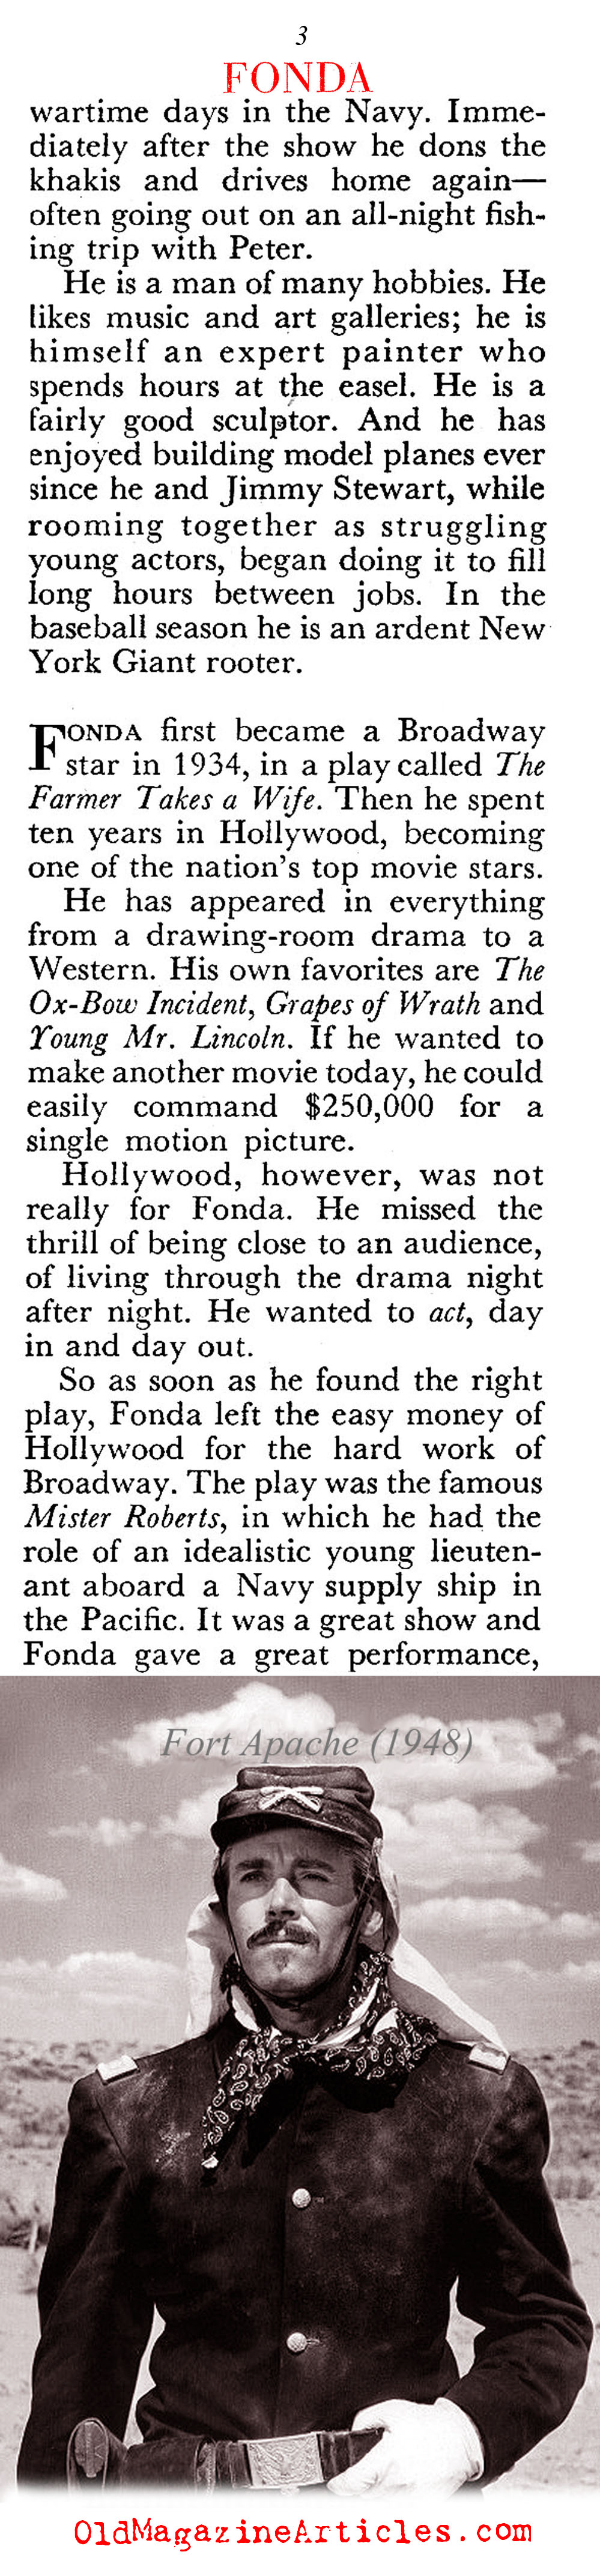 The Unusual Case of Henry Fonda (Coronet Magazine, 1953)